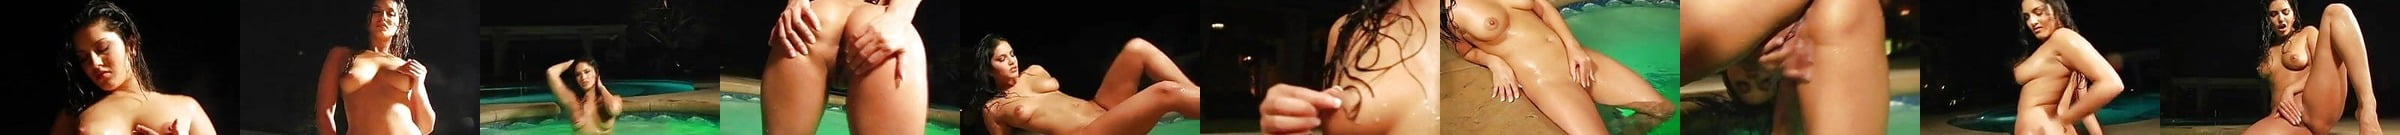 Sunny Leone Topless Talk Free Topless Tube Porn Video 38